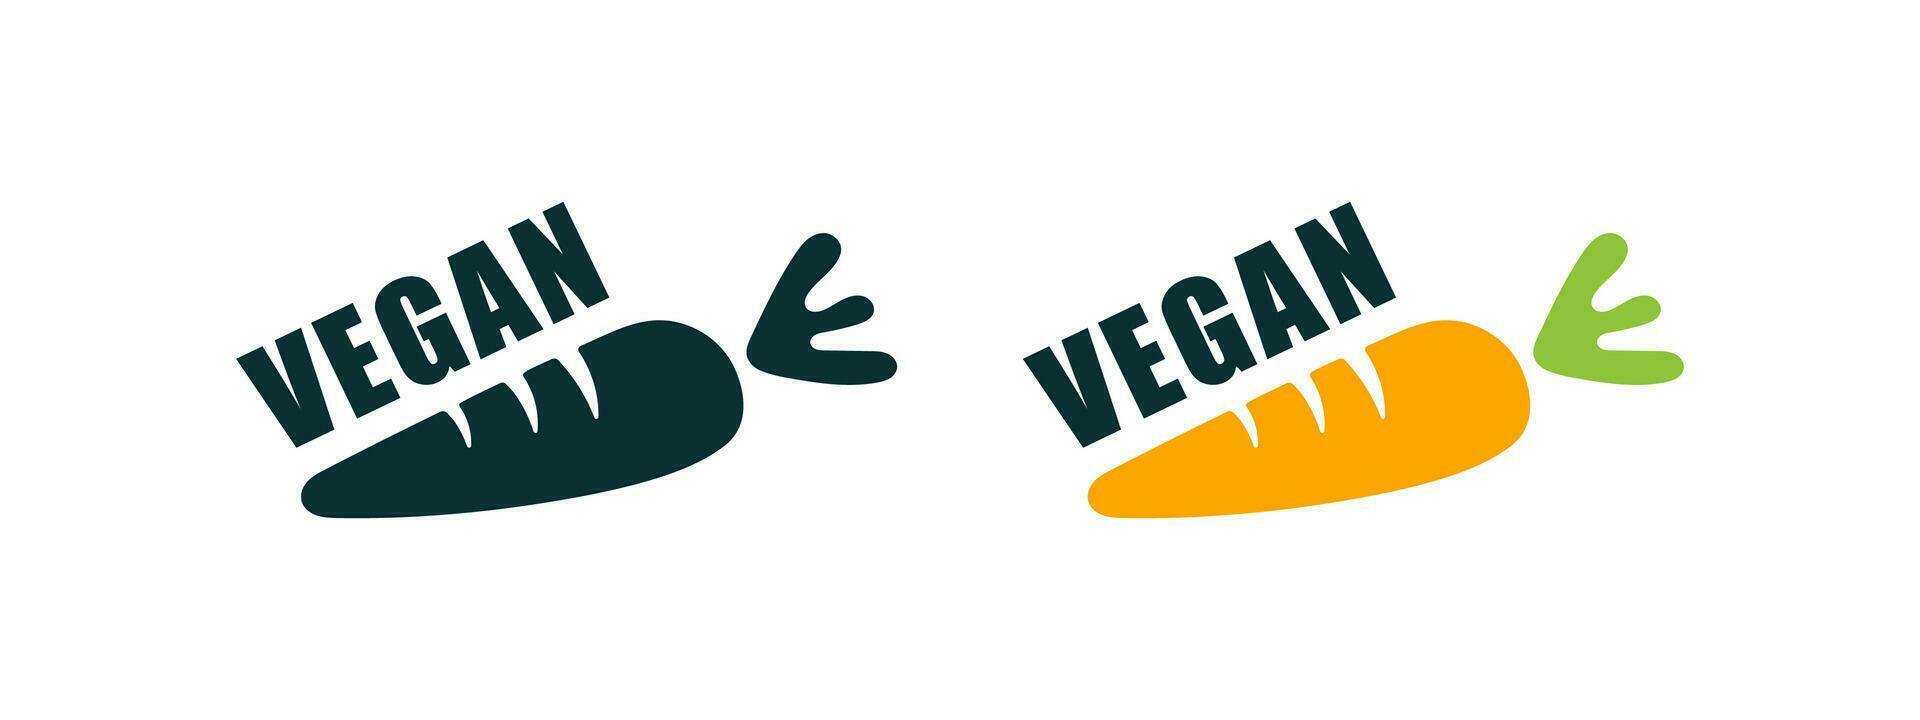 vegano insignias vegano alimento. natural y orgánico productos vector escalable gráficos